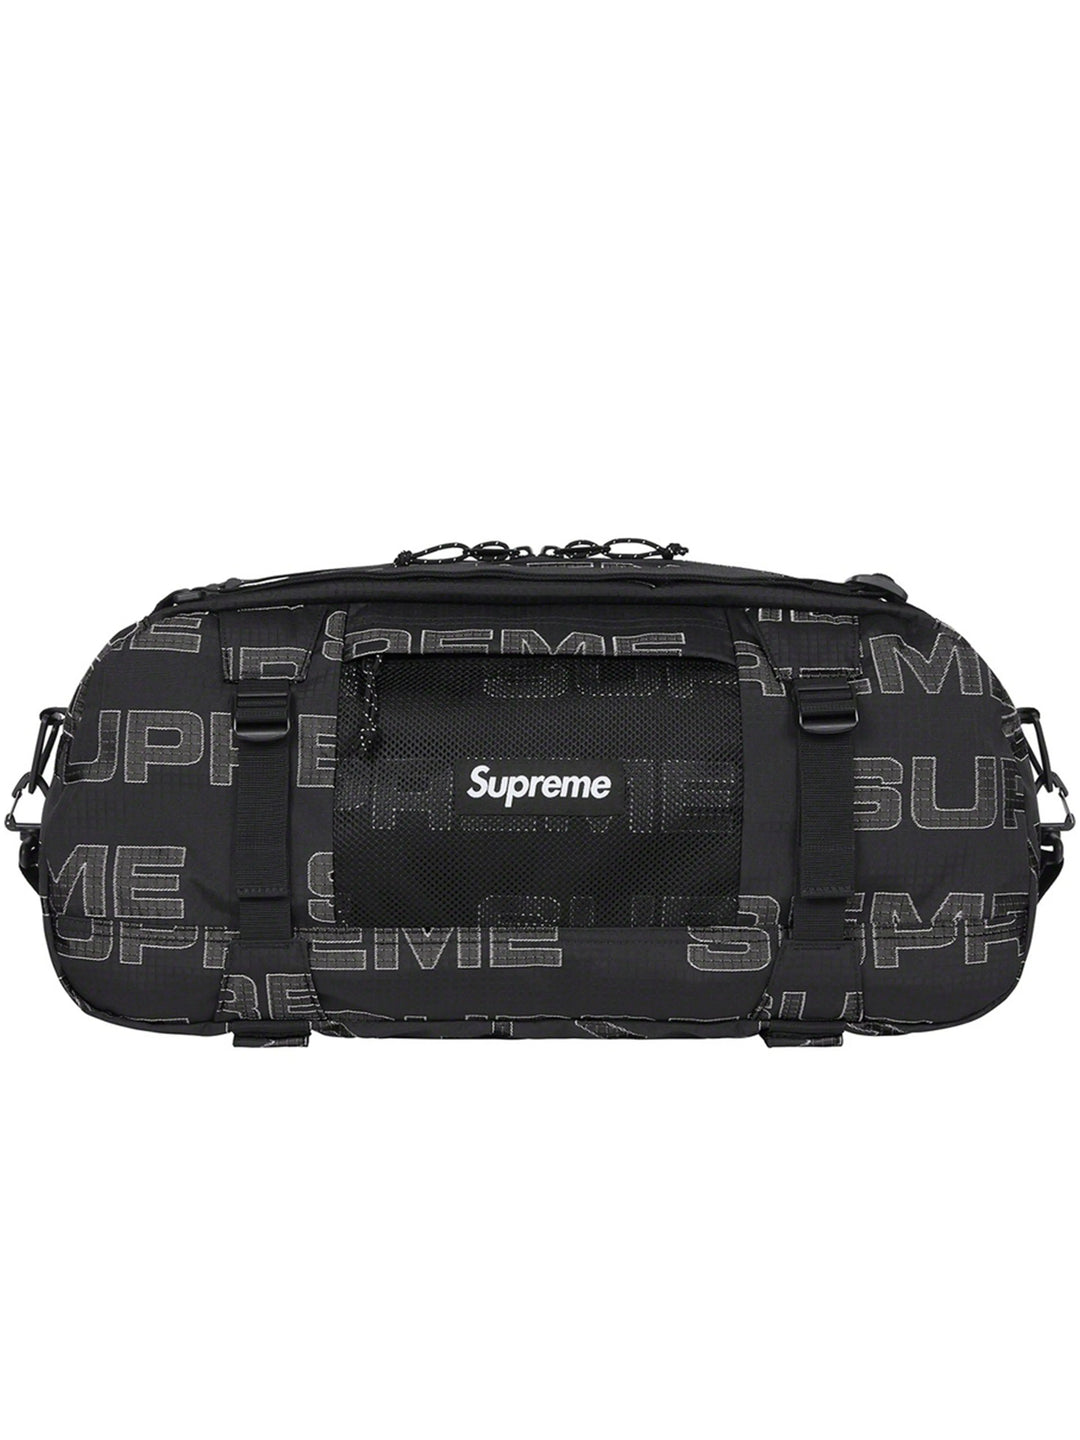 Supreme Duffle Bag Black [FW21] Prior